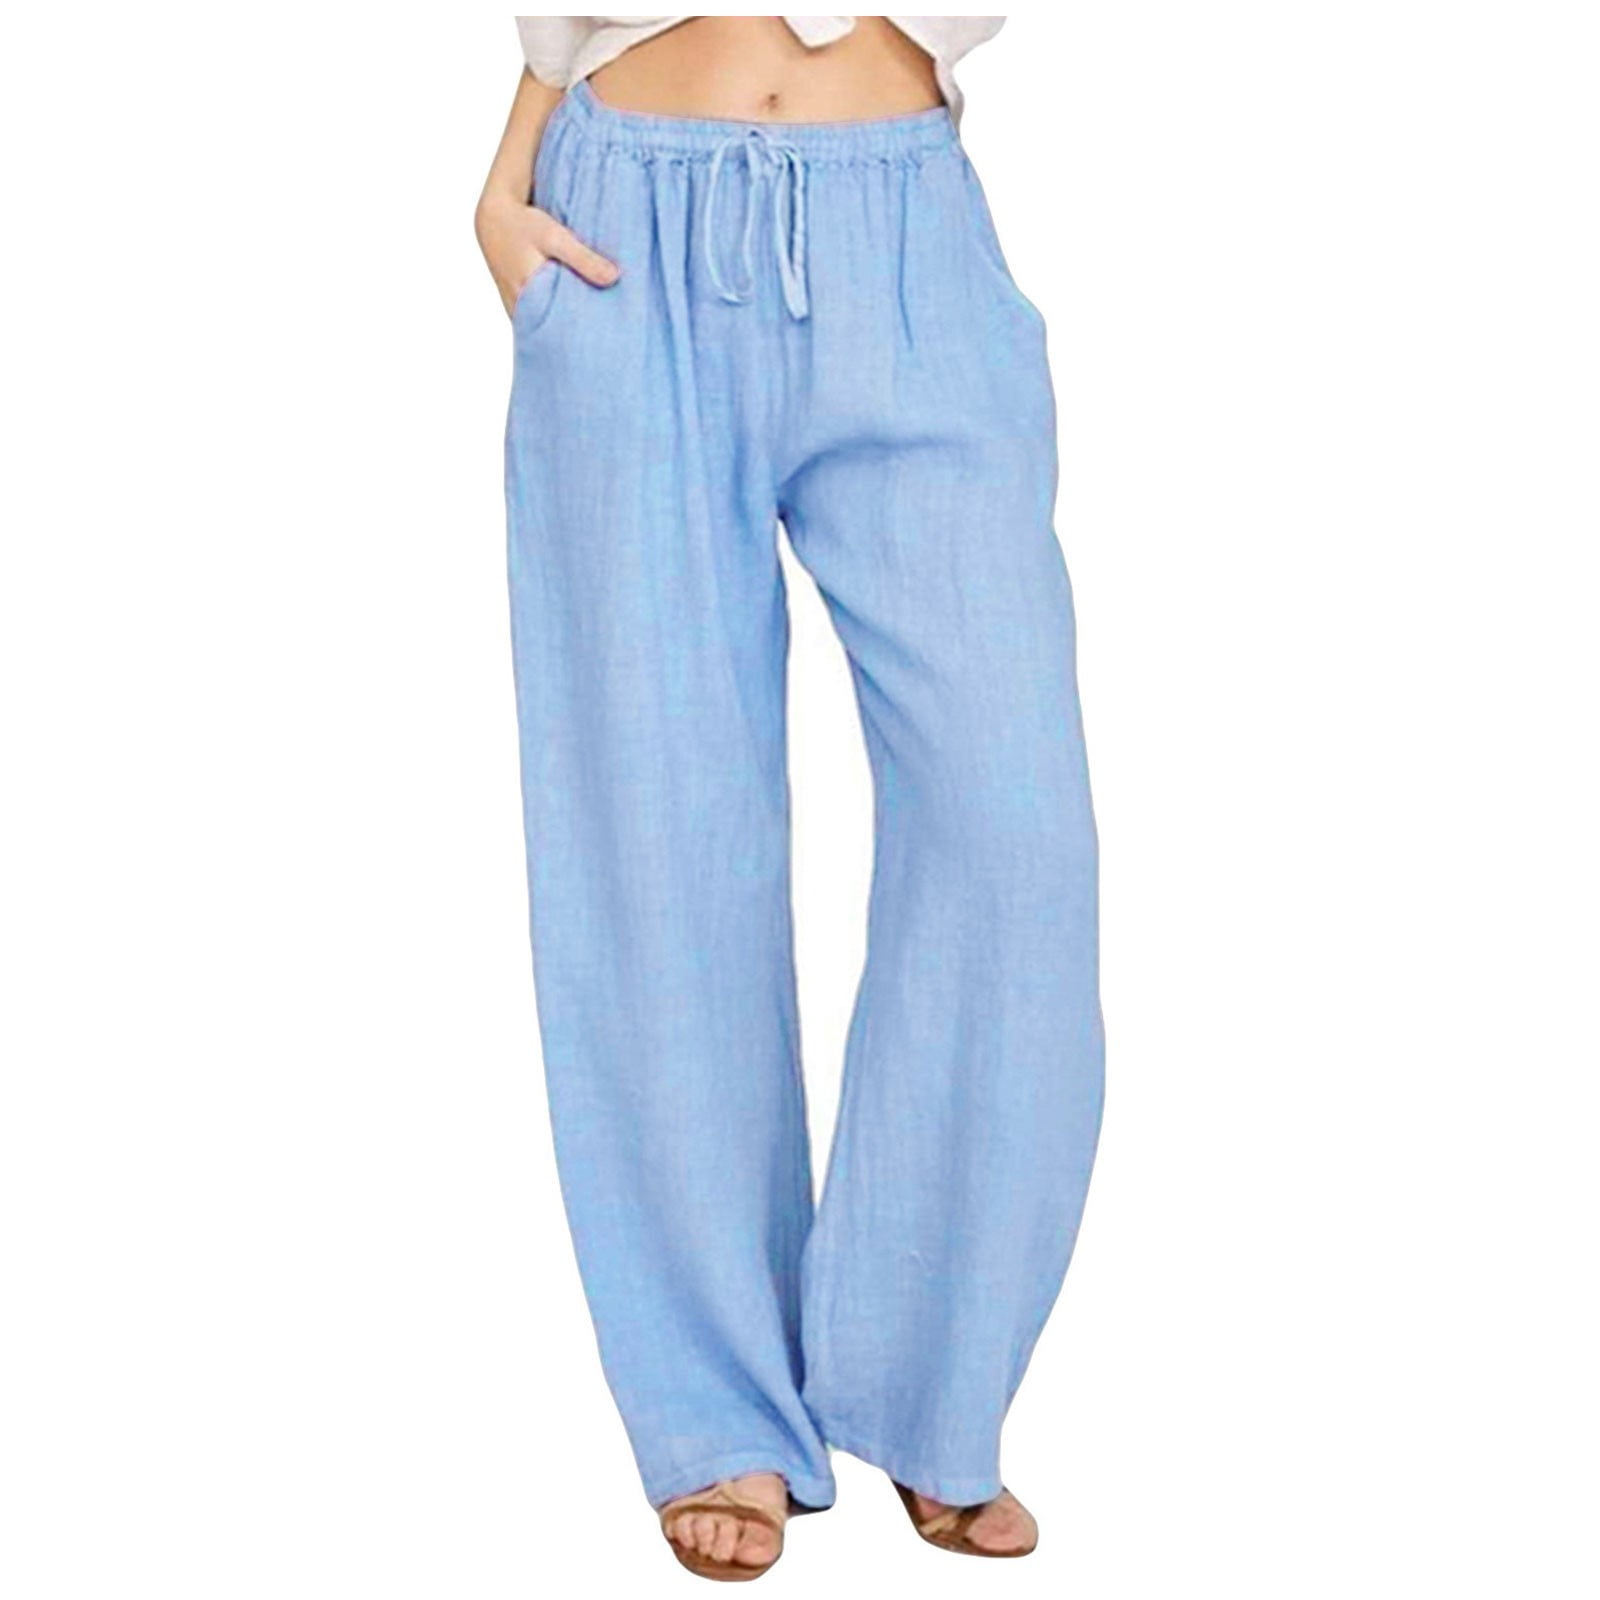 ZXHACSJ Women's Casual Solid Cotton Linen Elastic Waist Drawstring Wide Leg  Long Pants Light blue M